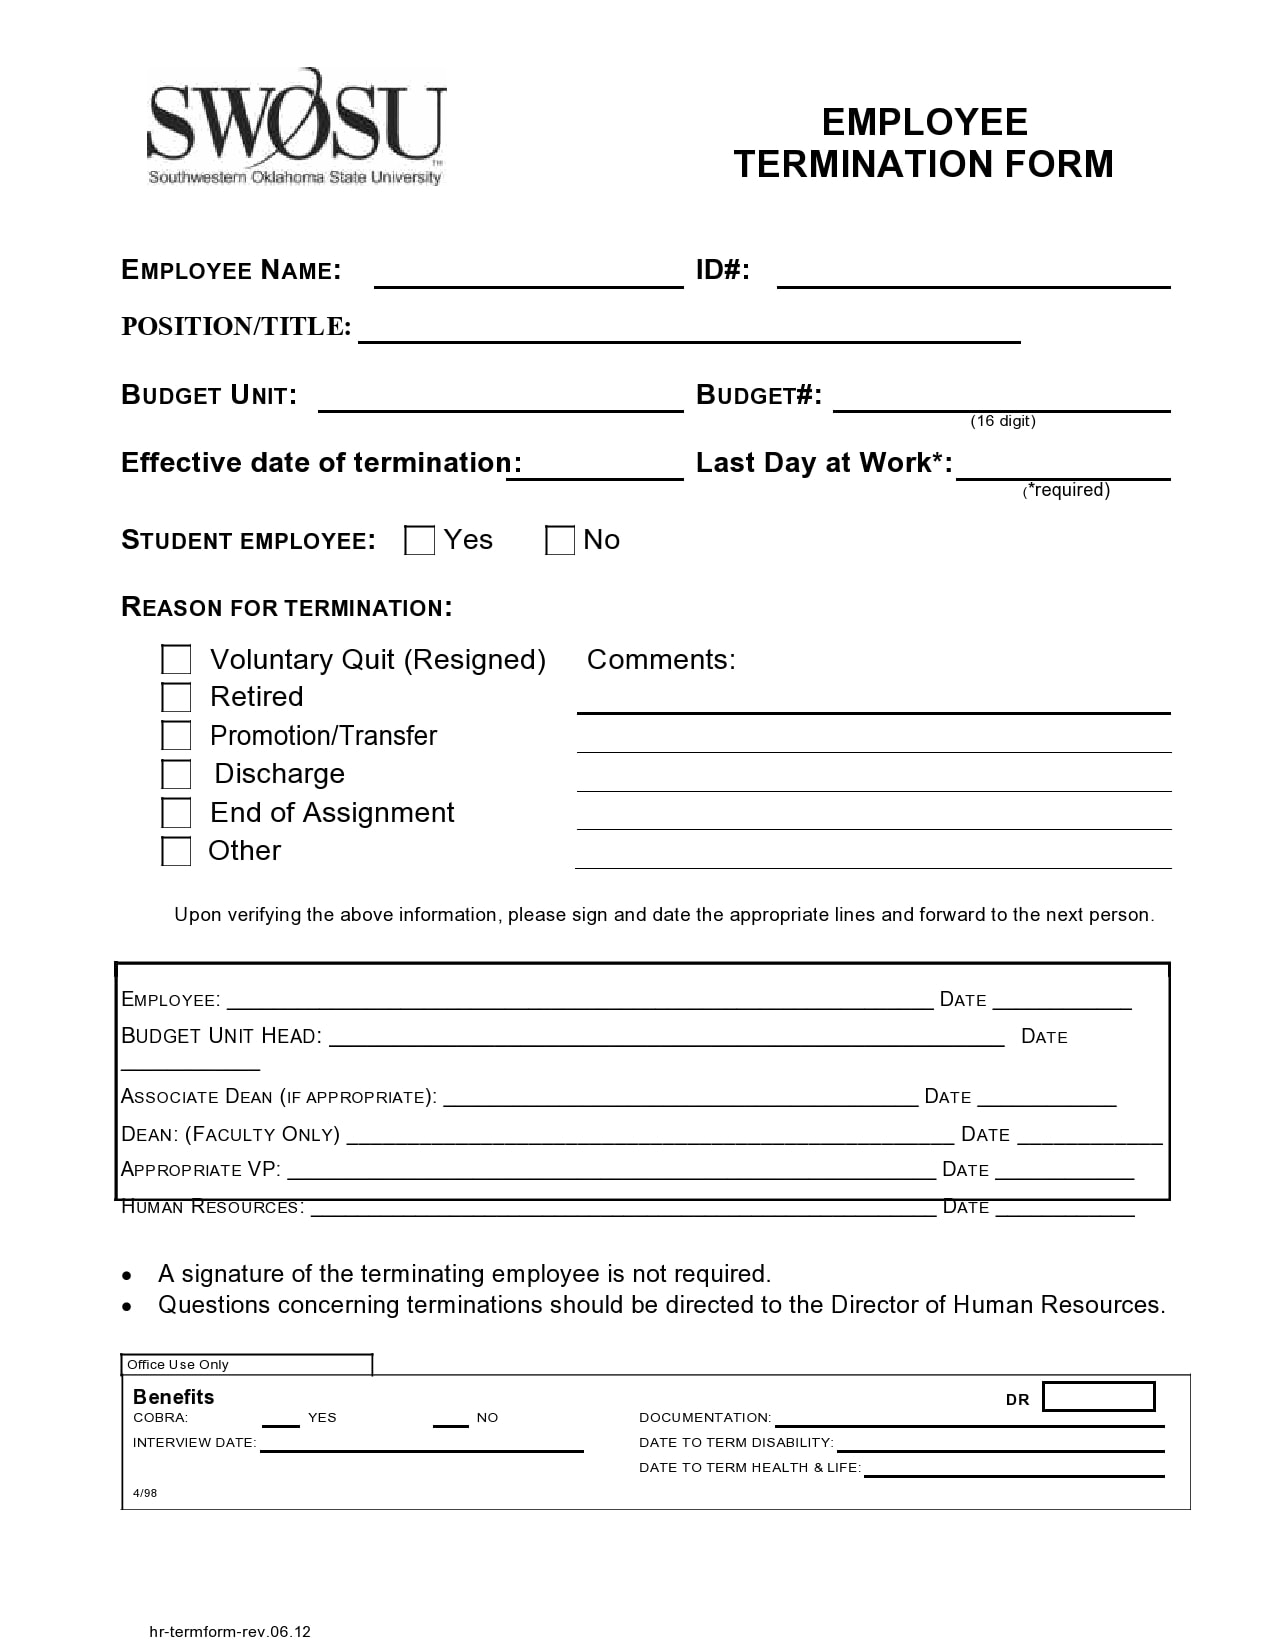 employee-termination-form-free-printable-documents